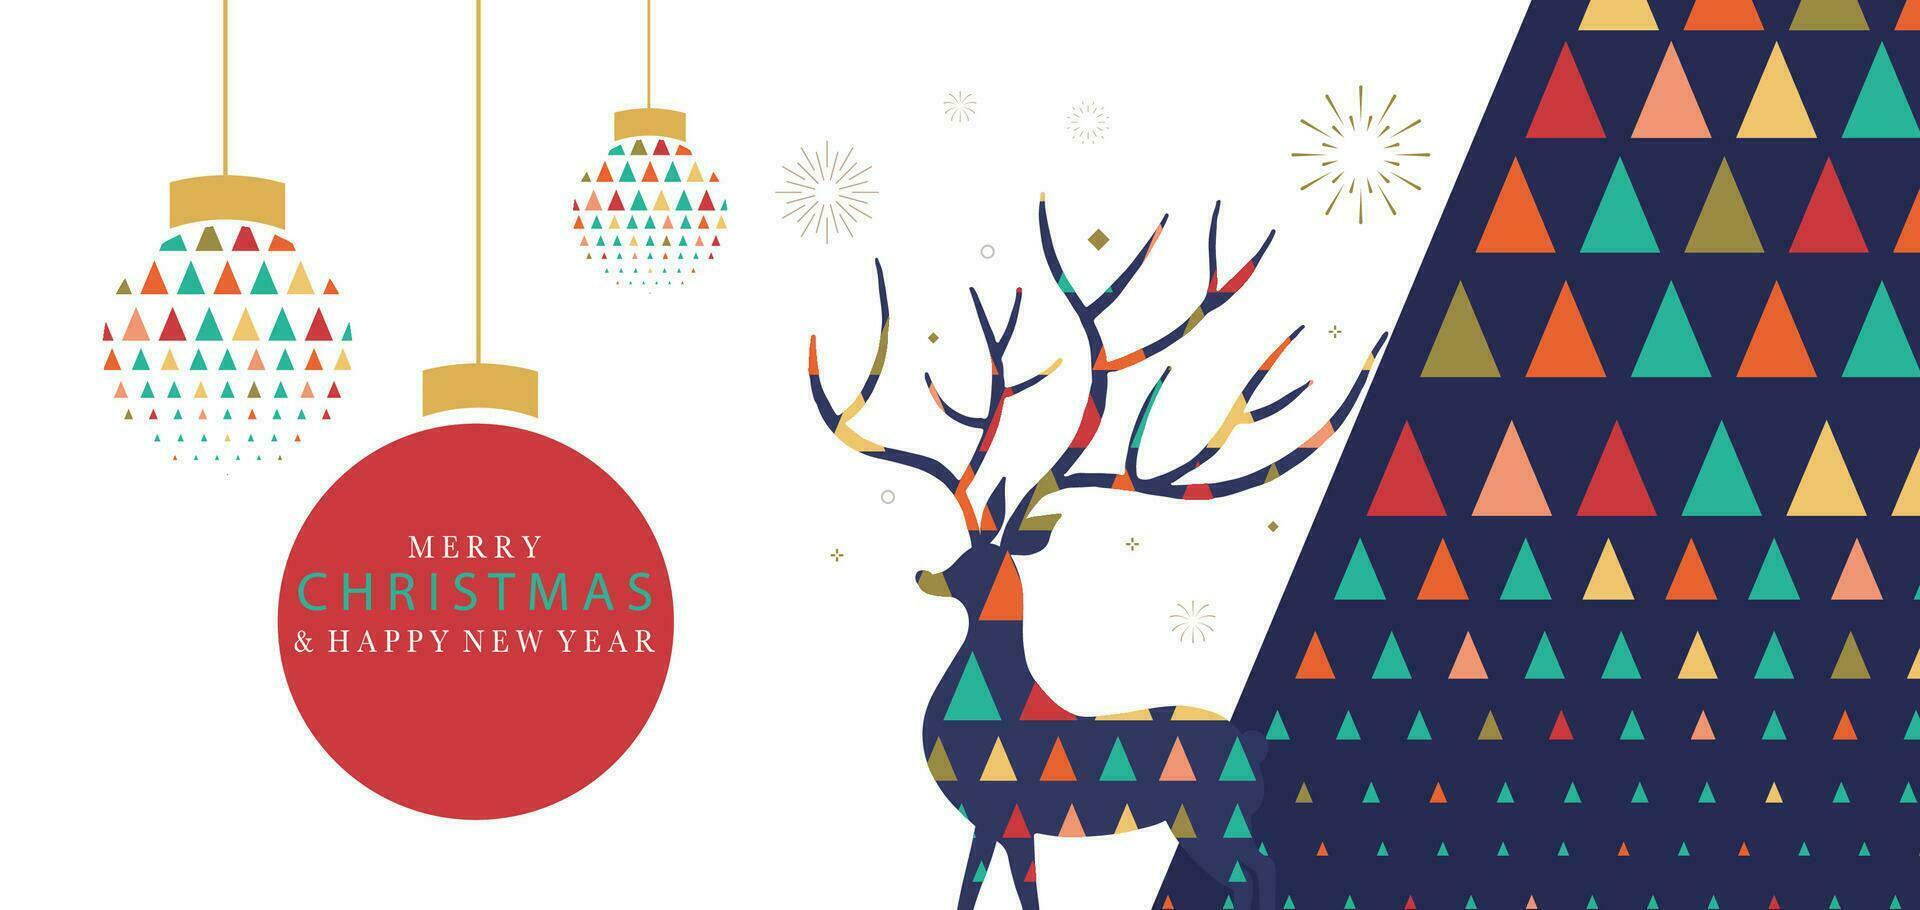 Kerstmis meetkundig banier achtergrond met Kerstmis boom, rendieren.bewerkbaar vector illustratie voor ansichtkaart, horizontaal grootte